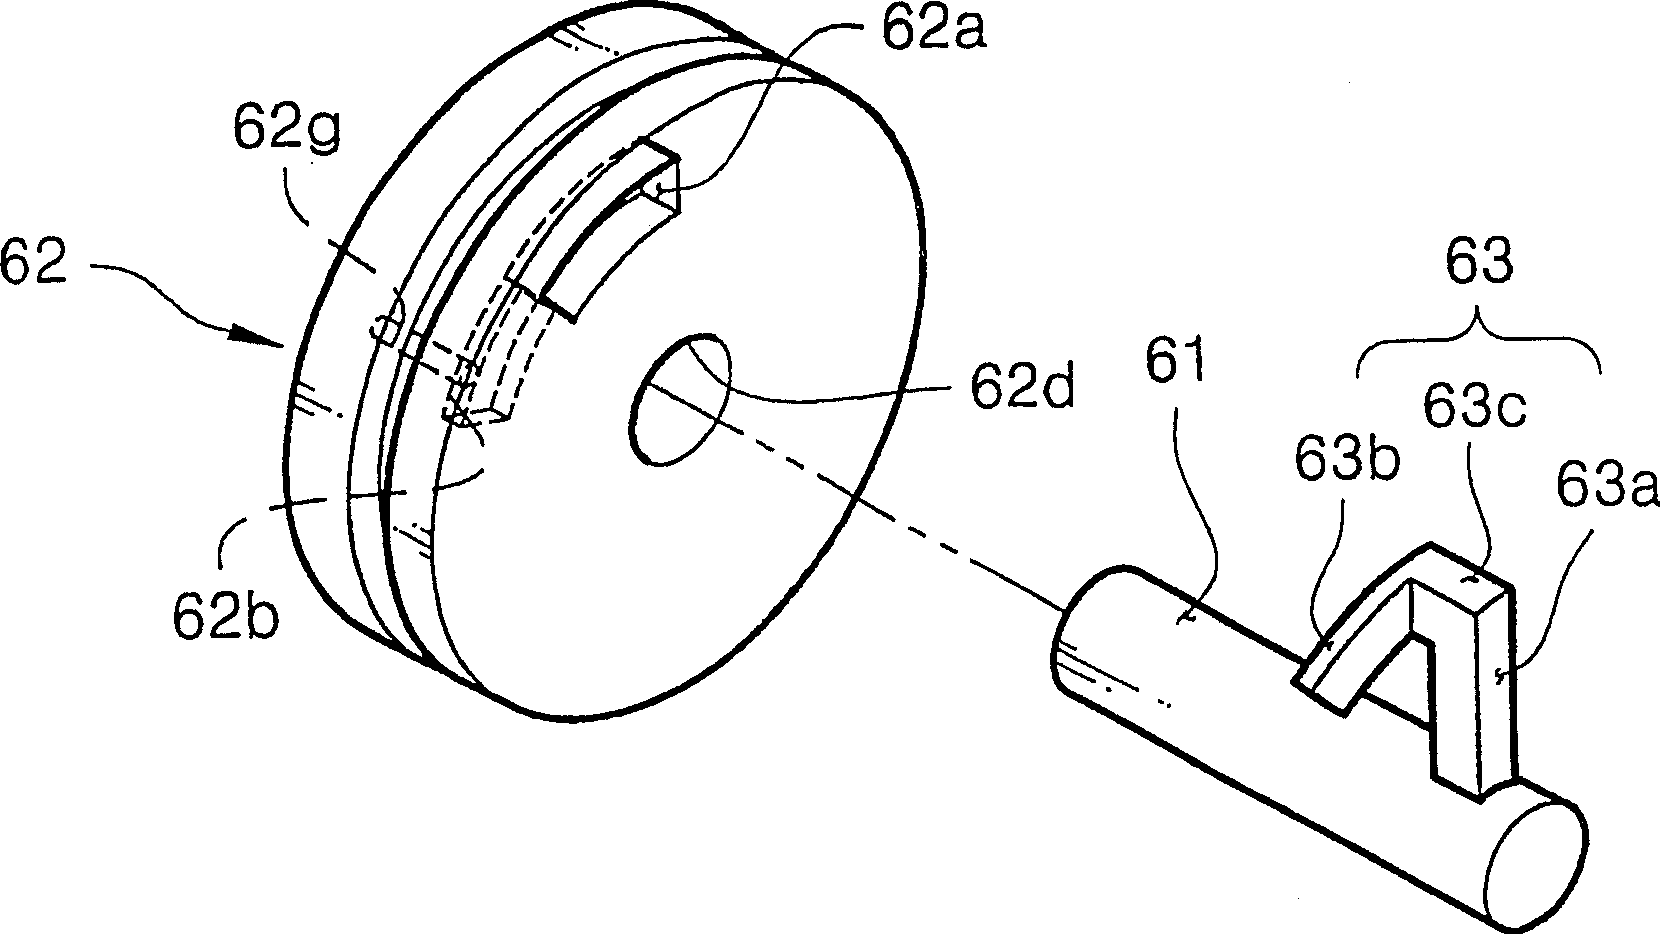 Brake actuating system using an electric motor